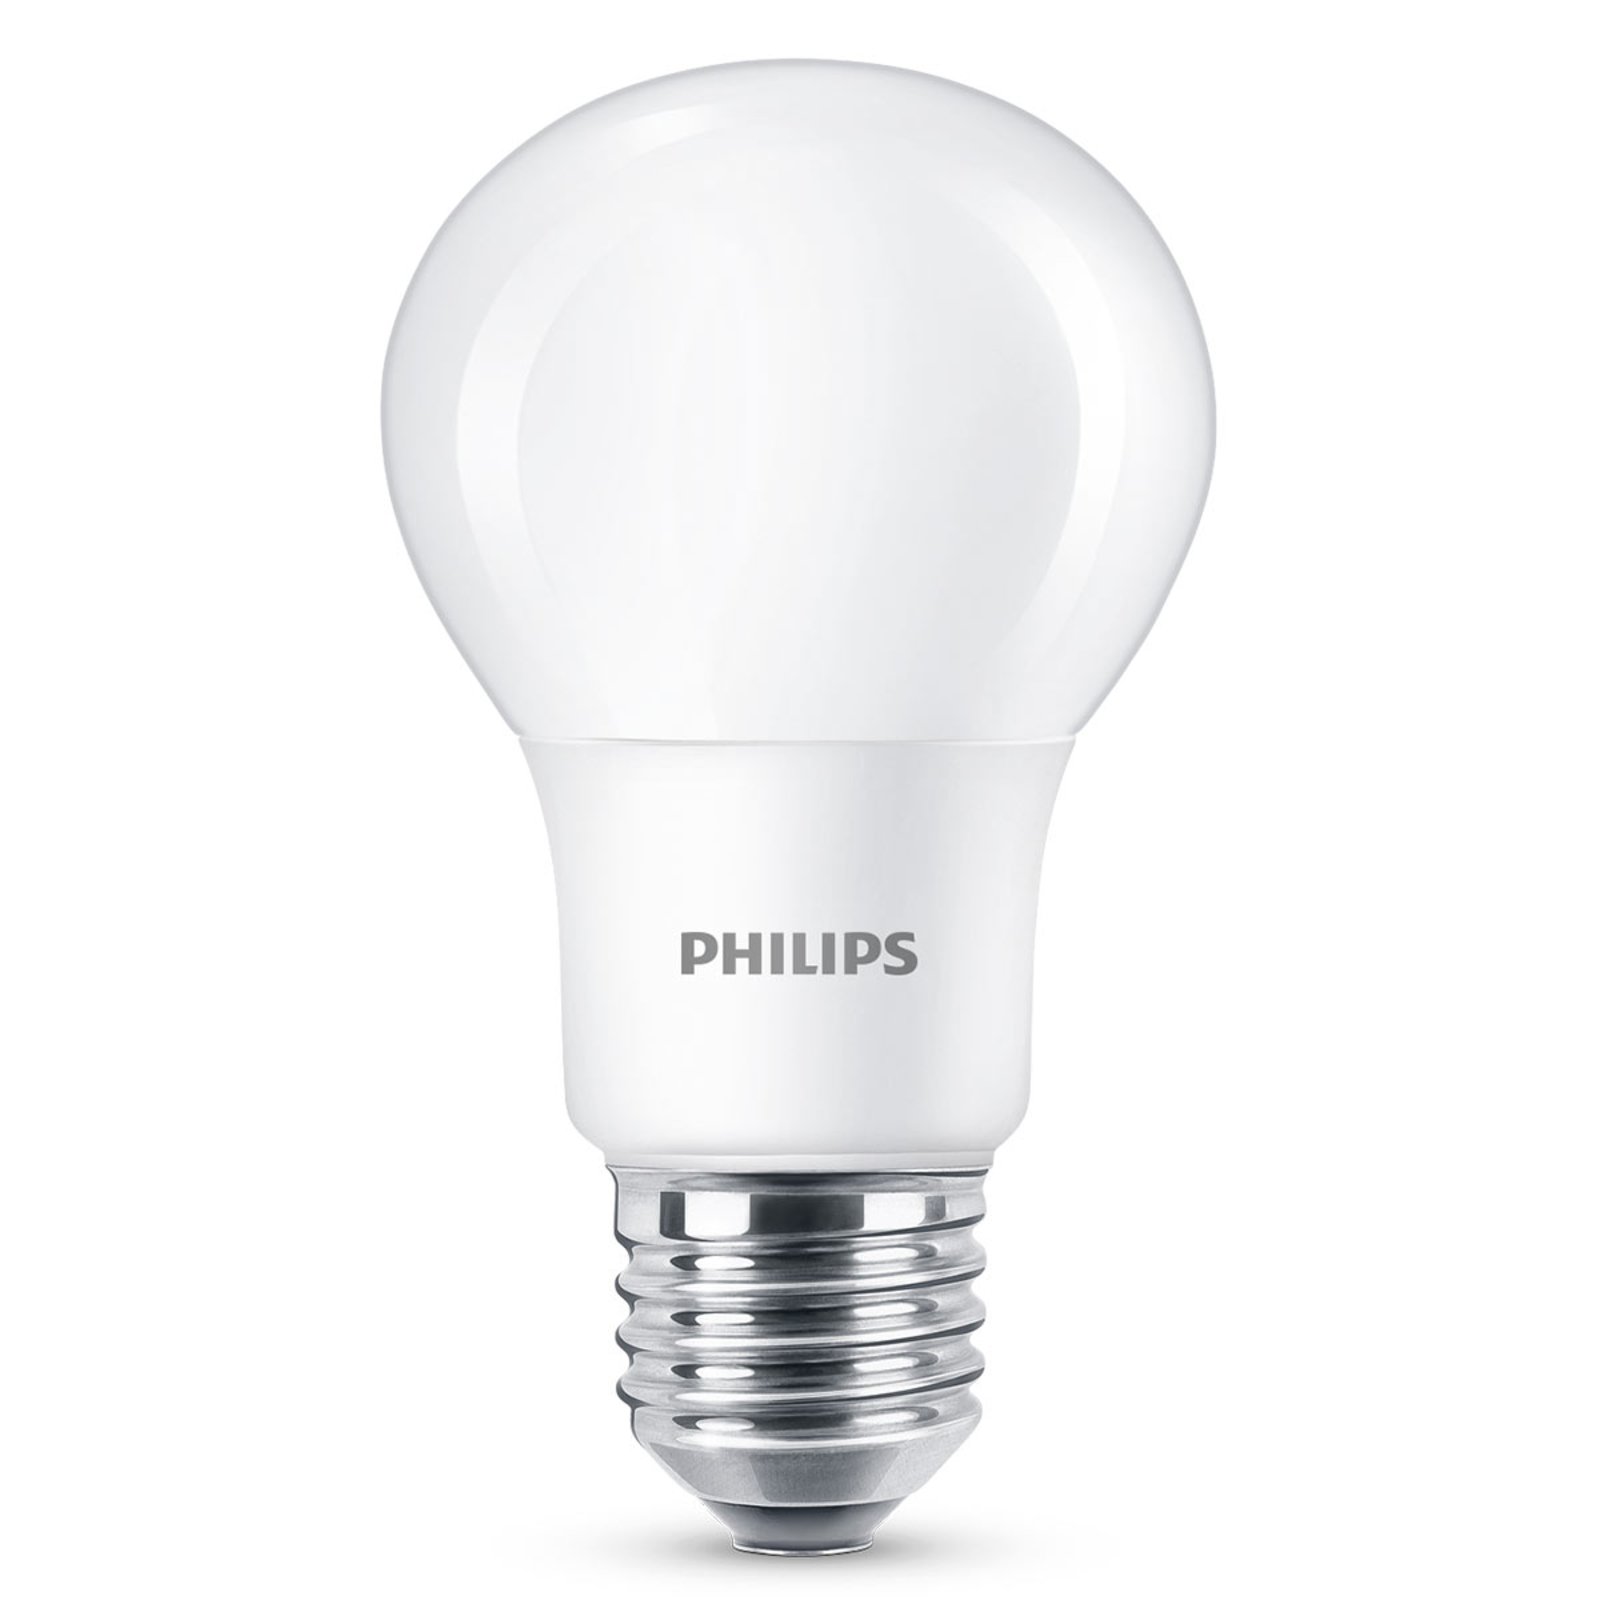 Philips E27 LED lamp 2,2W warmwit, niet dimbaar